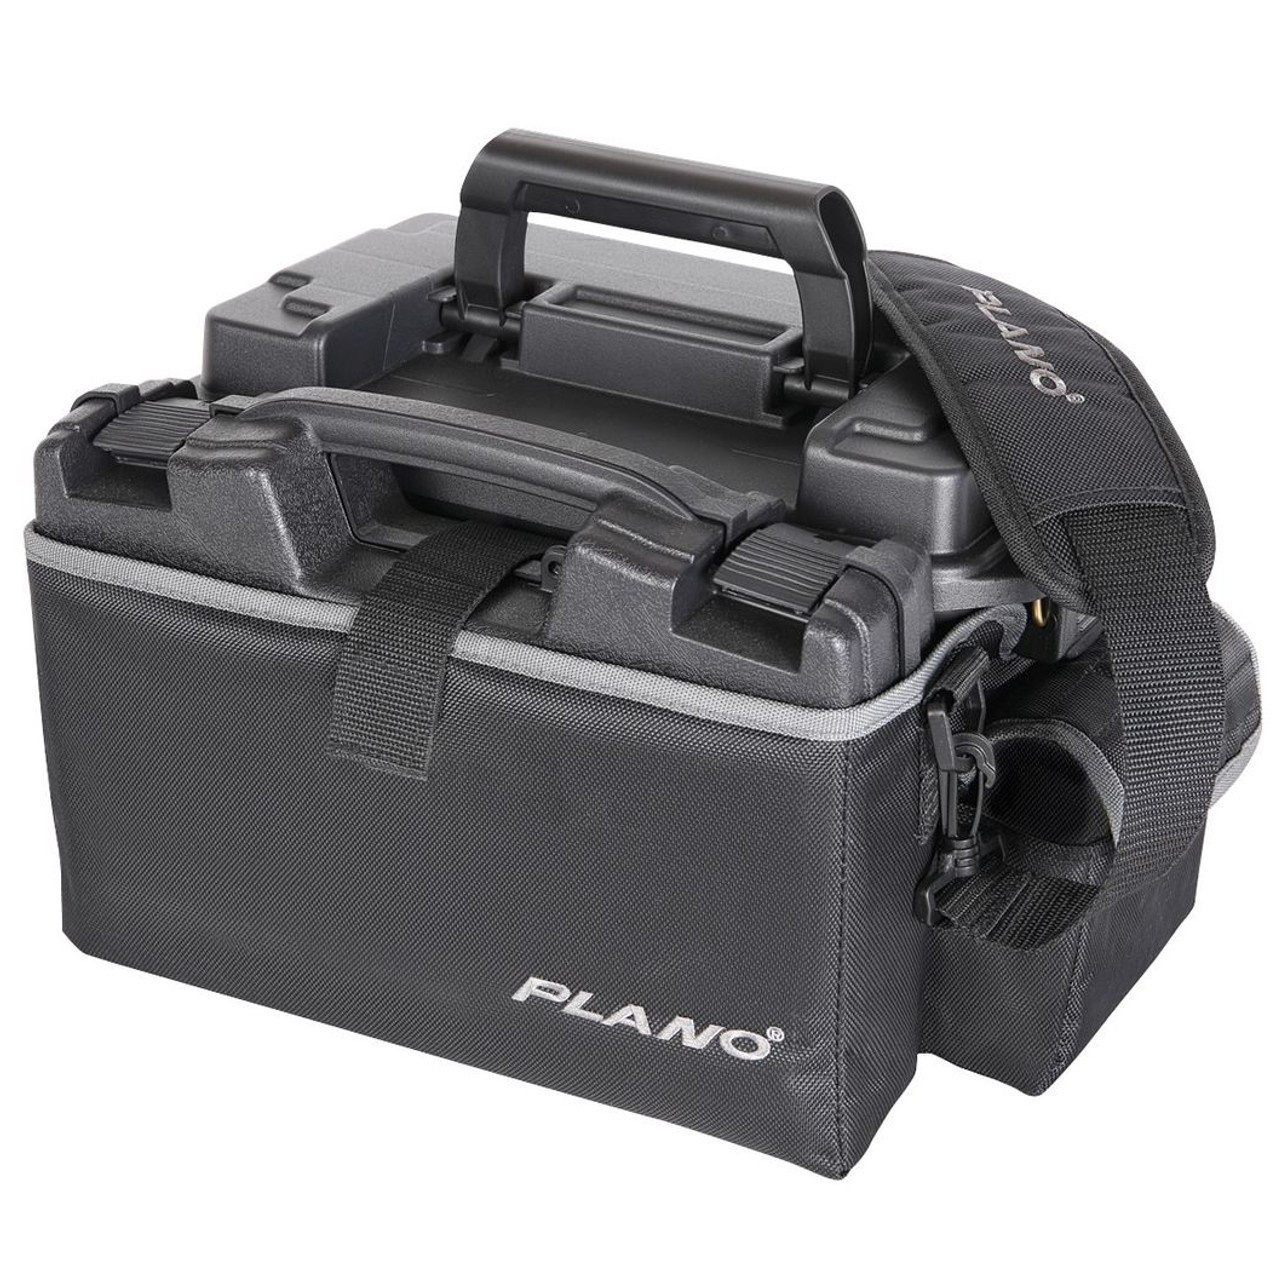 Plano X2 Range Bag with handgun case and ammunition box - BK